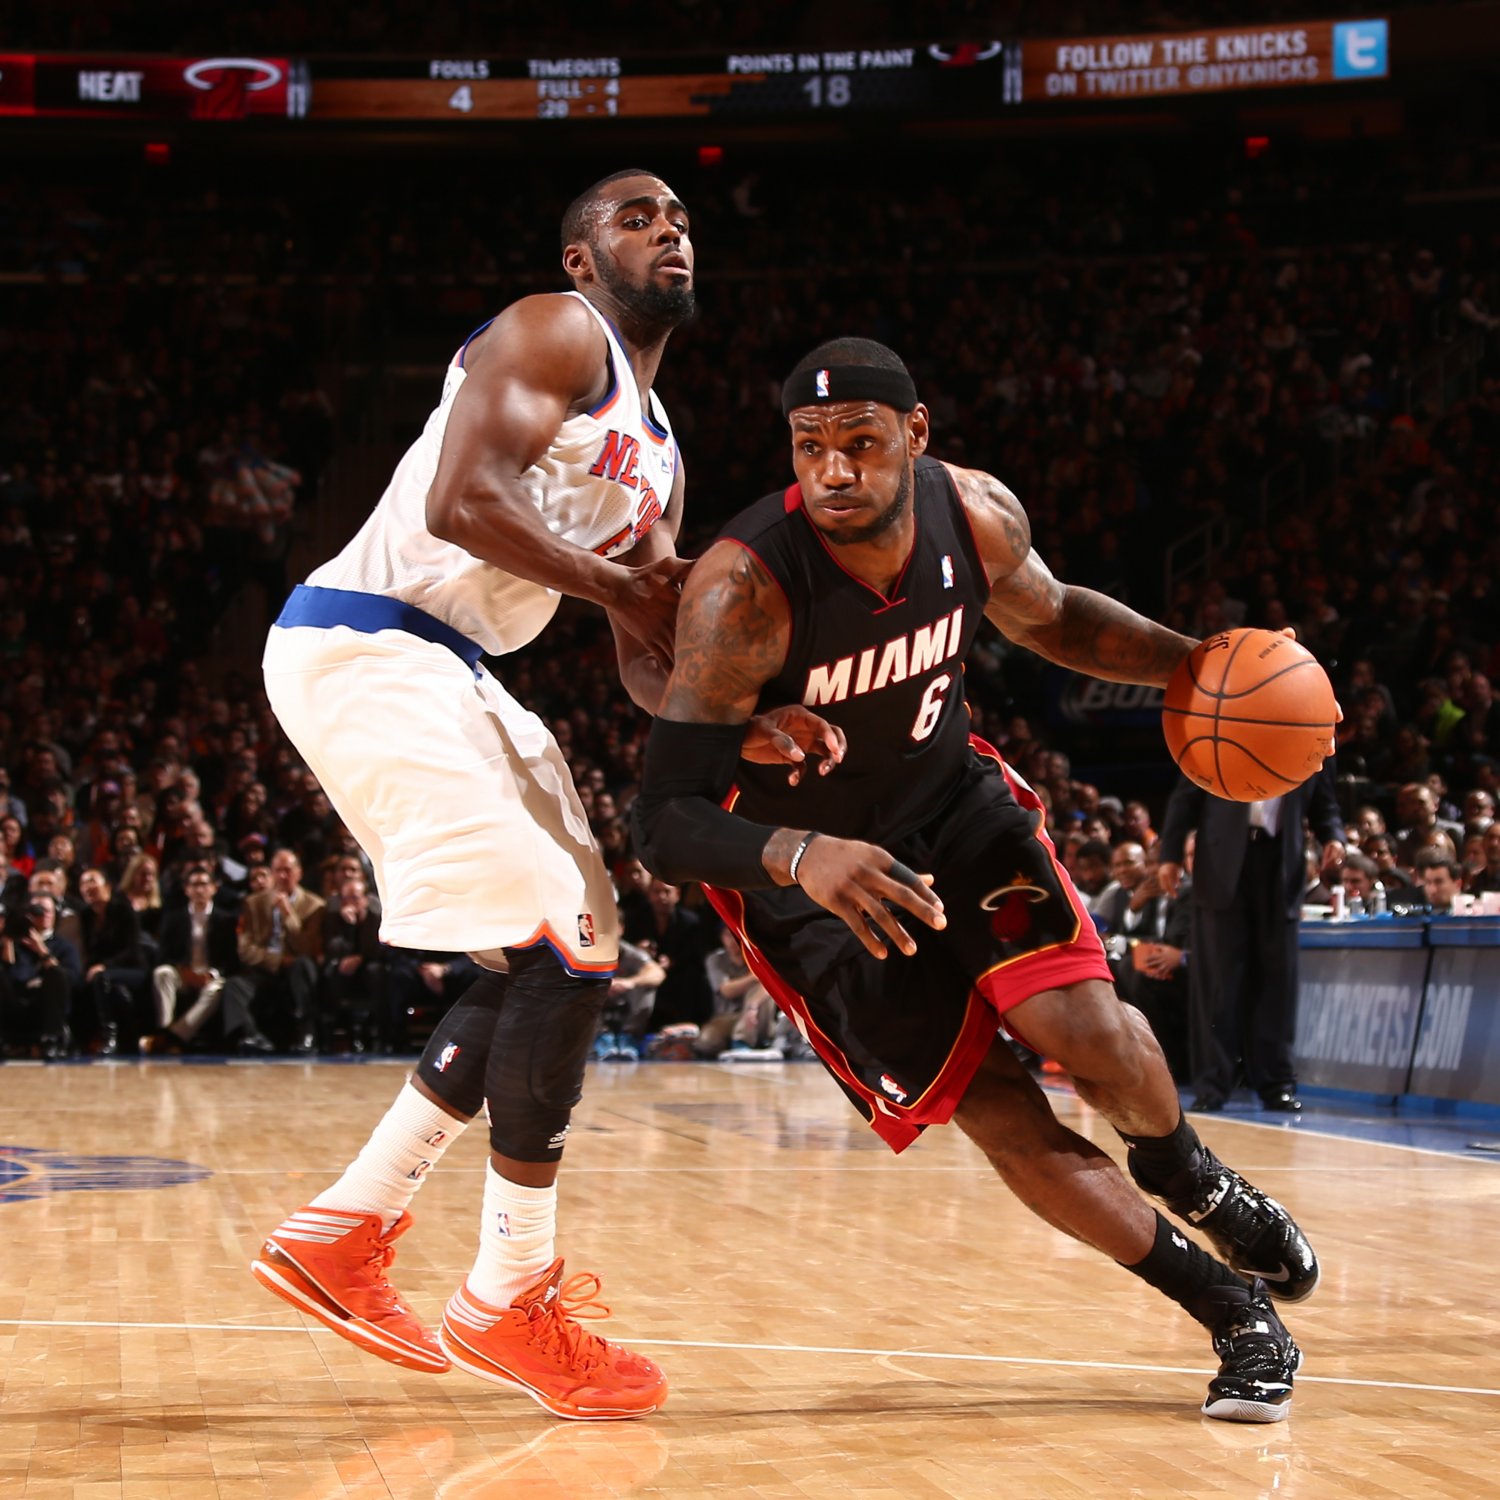 New York Knicks vs. Miami Heat Live Score and Analysis Bleacher Report